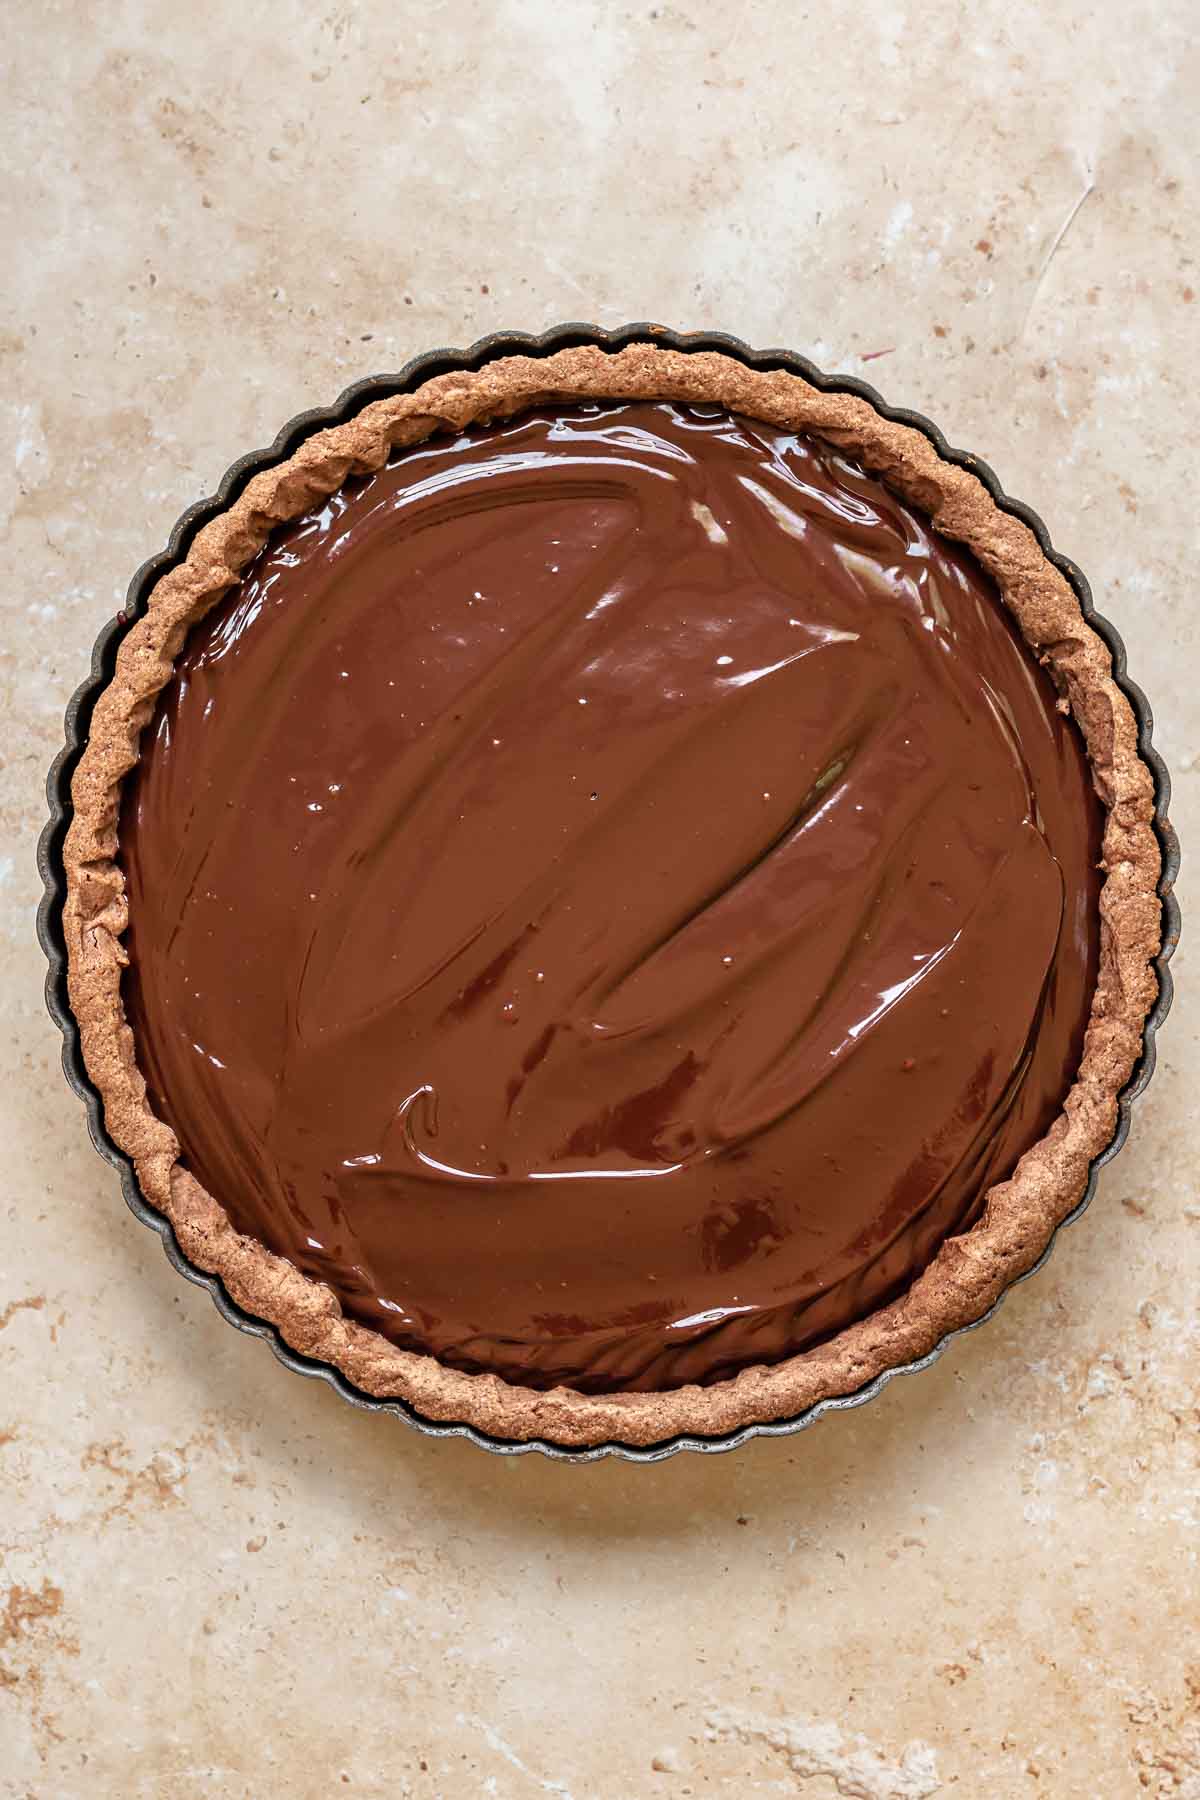 Dark chocolate ganache in a tart shell spread smoothly.